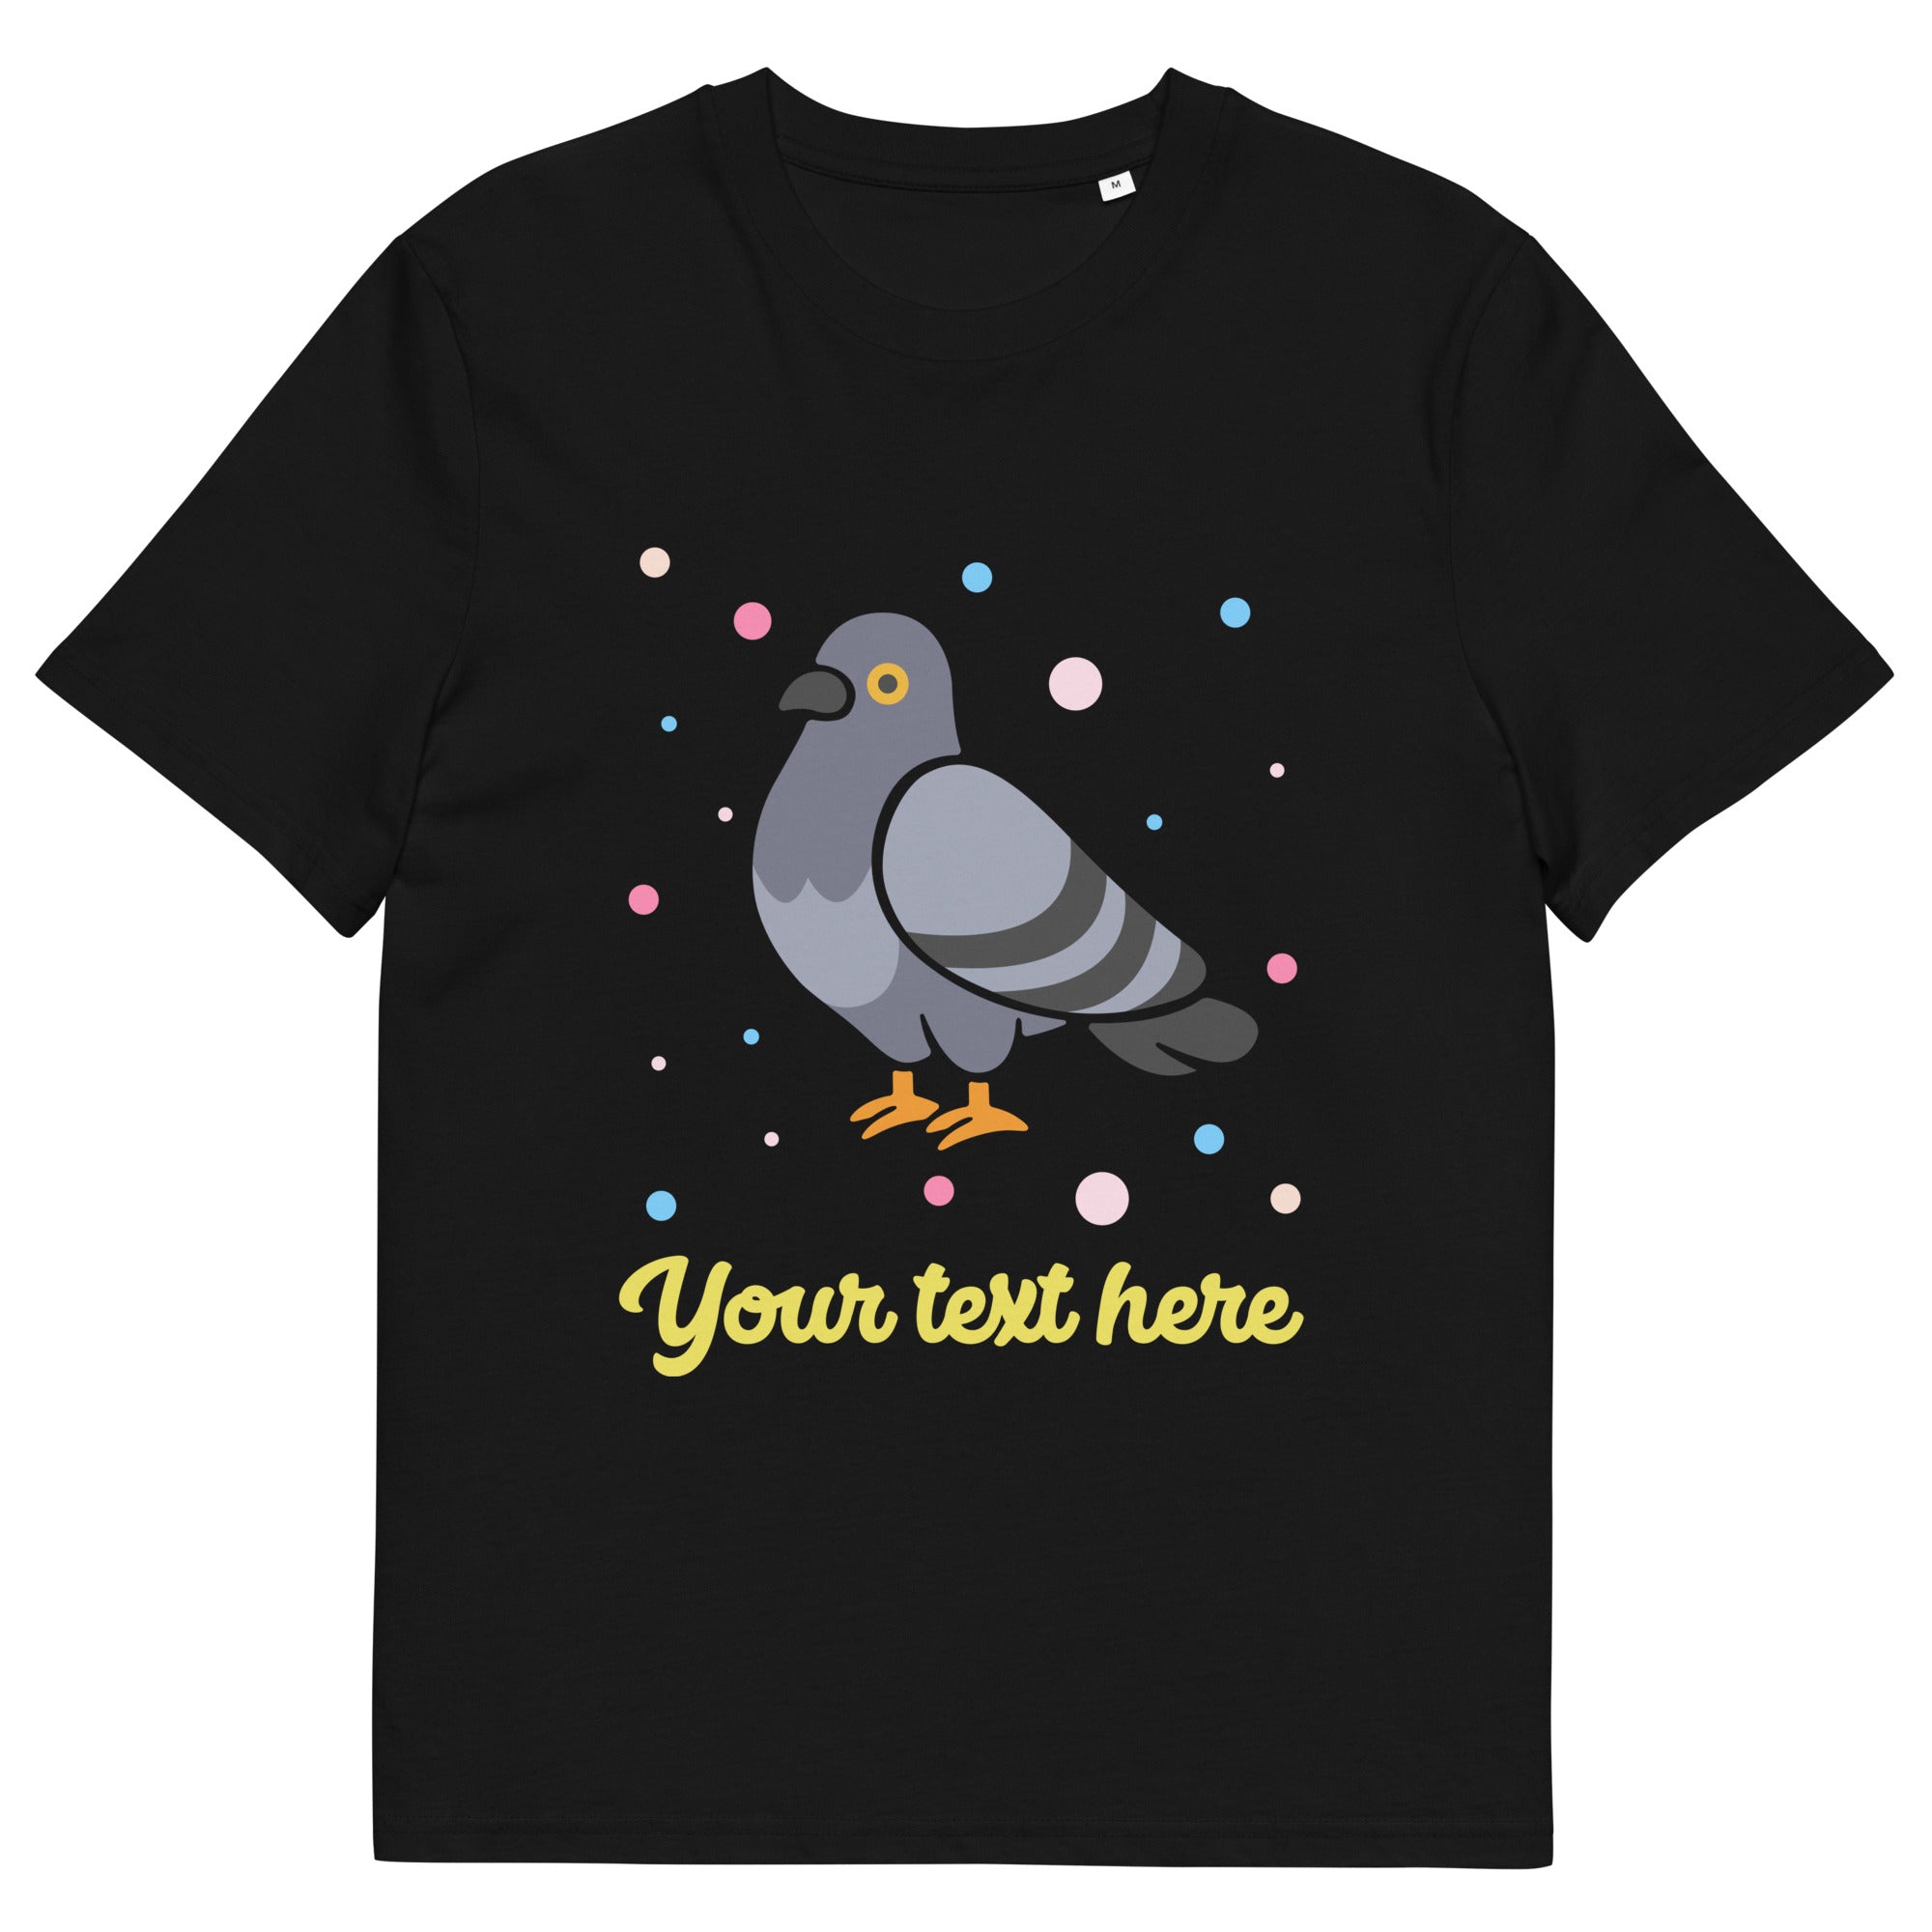 Personalised Custom Text - Organic Cotton Adults Unisex T-Shirt - London Doodles - Pigeon - Black